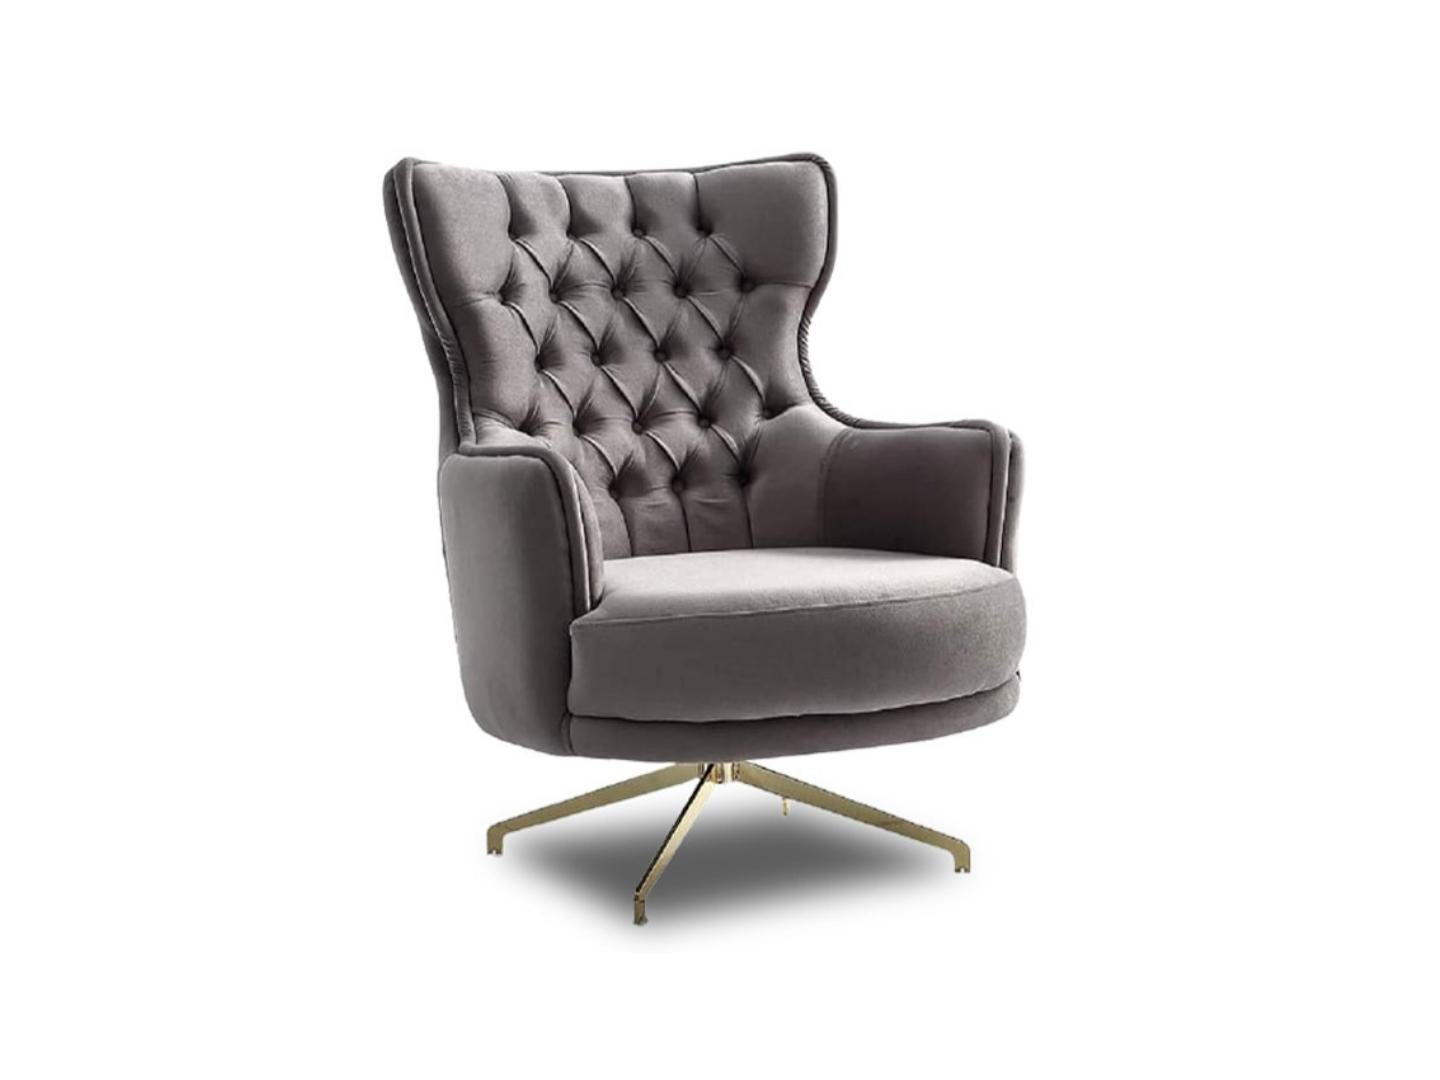 luxurious armchair gold legs - Lux Furniture